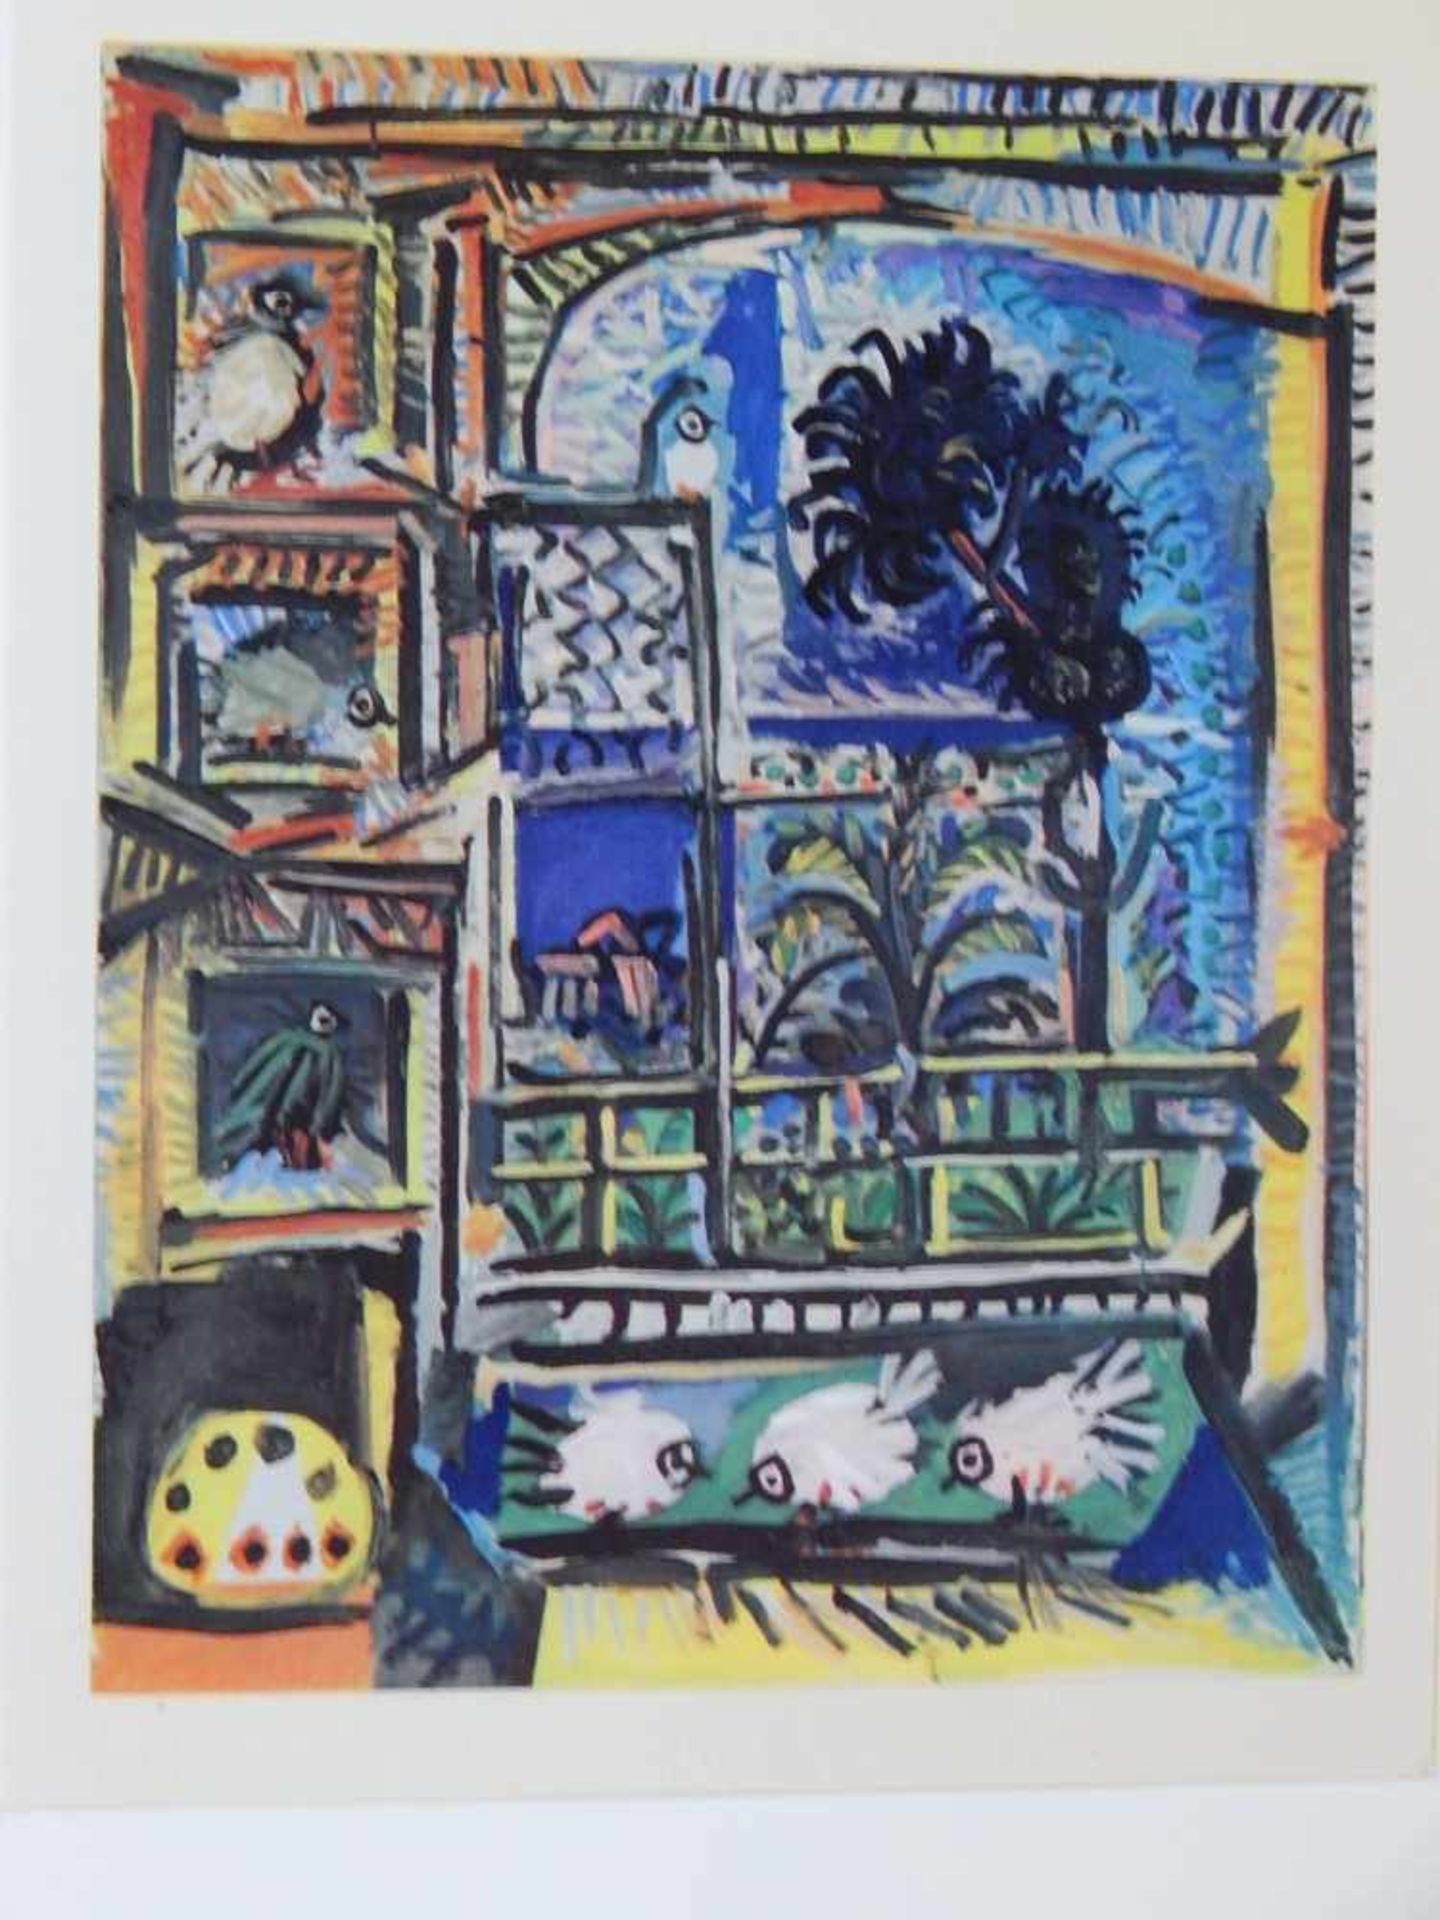 Pablo Picasso(1881-1973) "Les menines", Farbheliogravure, Vergl. Cramer 1997, Draeger Freres 1958,